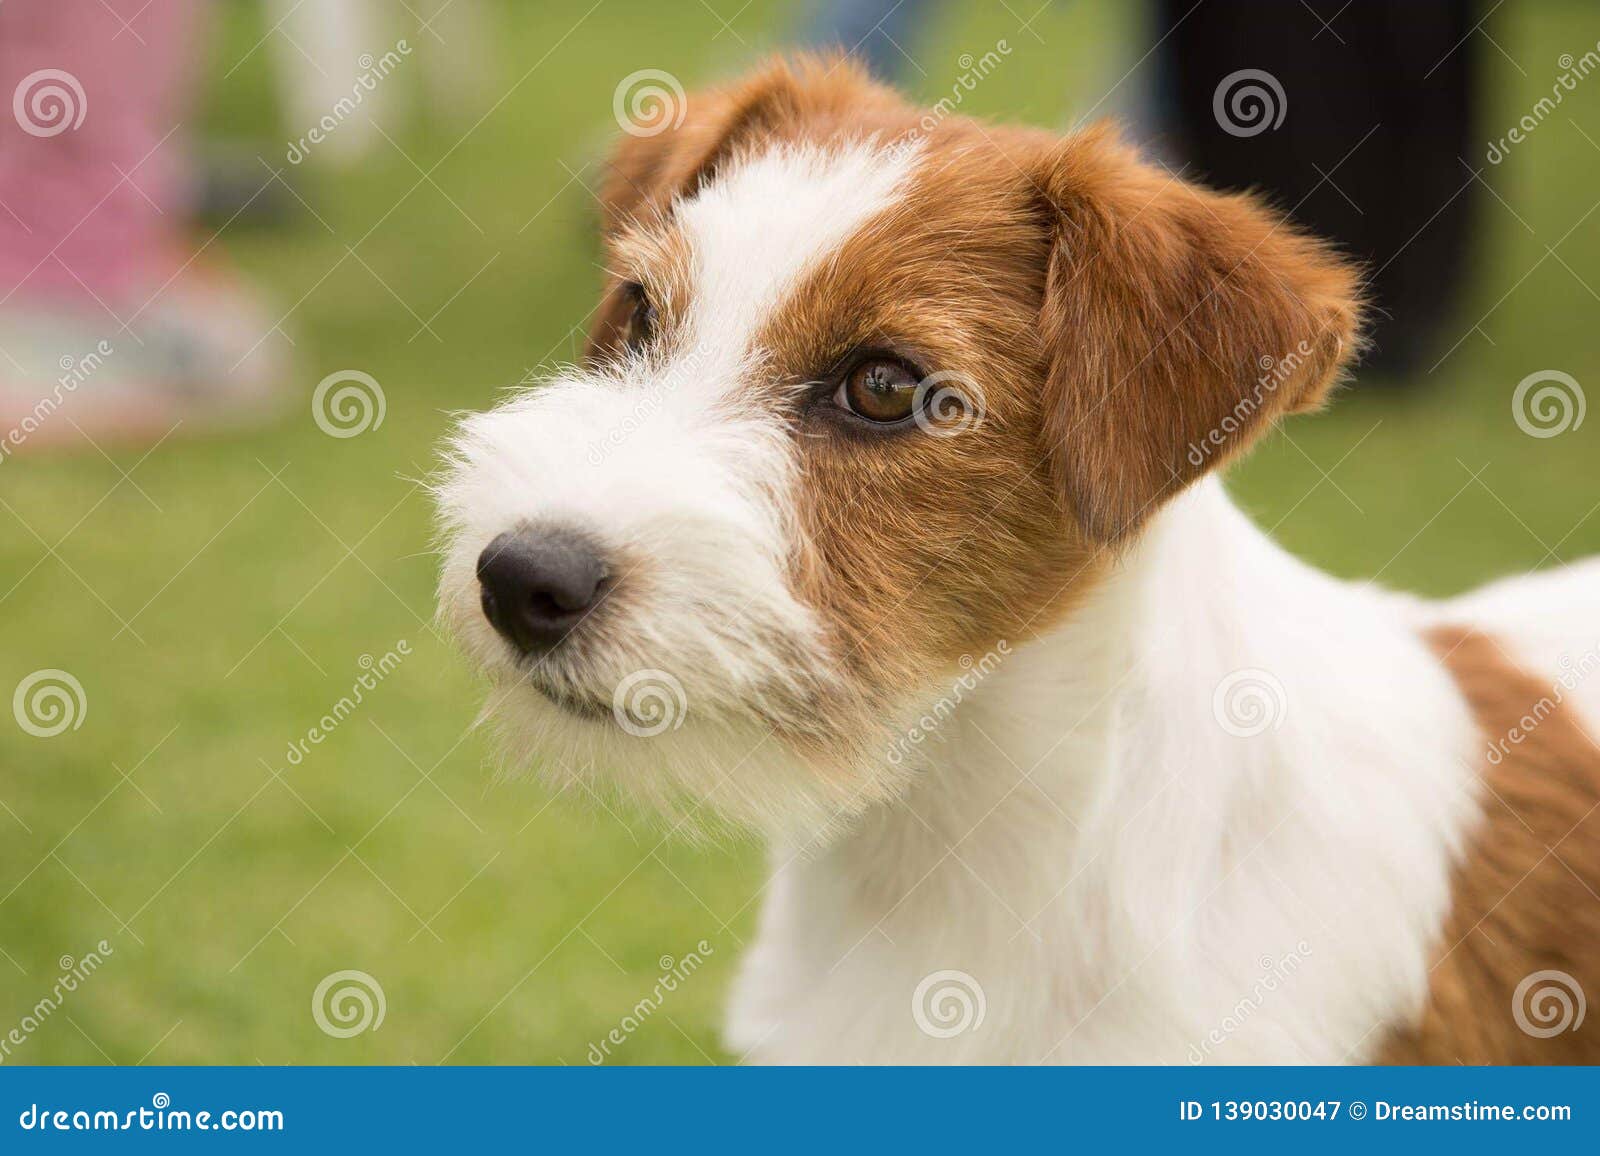 puppy dog love terrier sweet pet